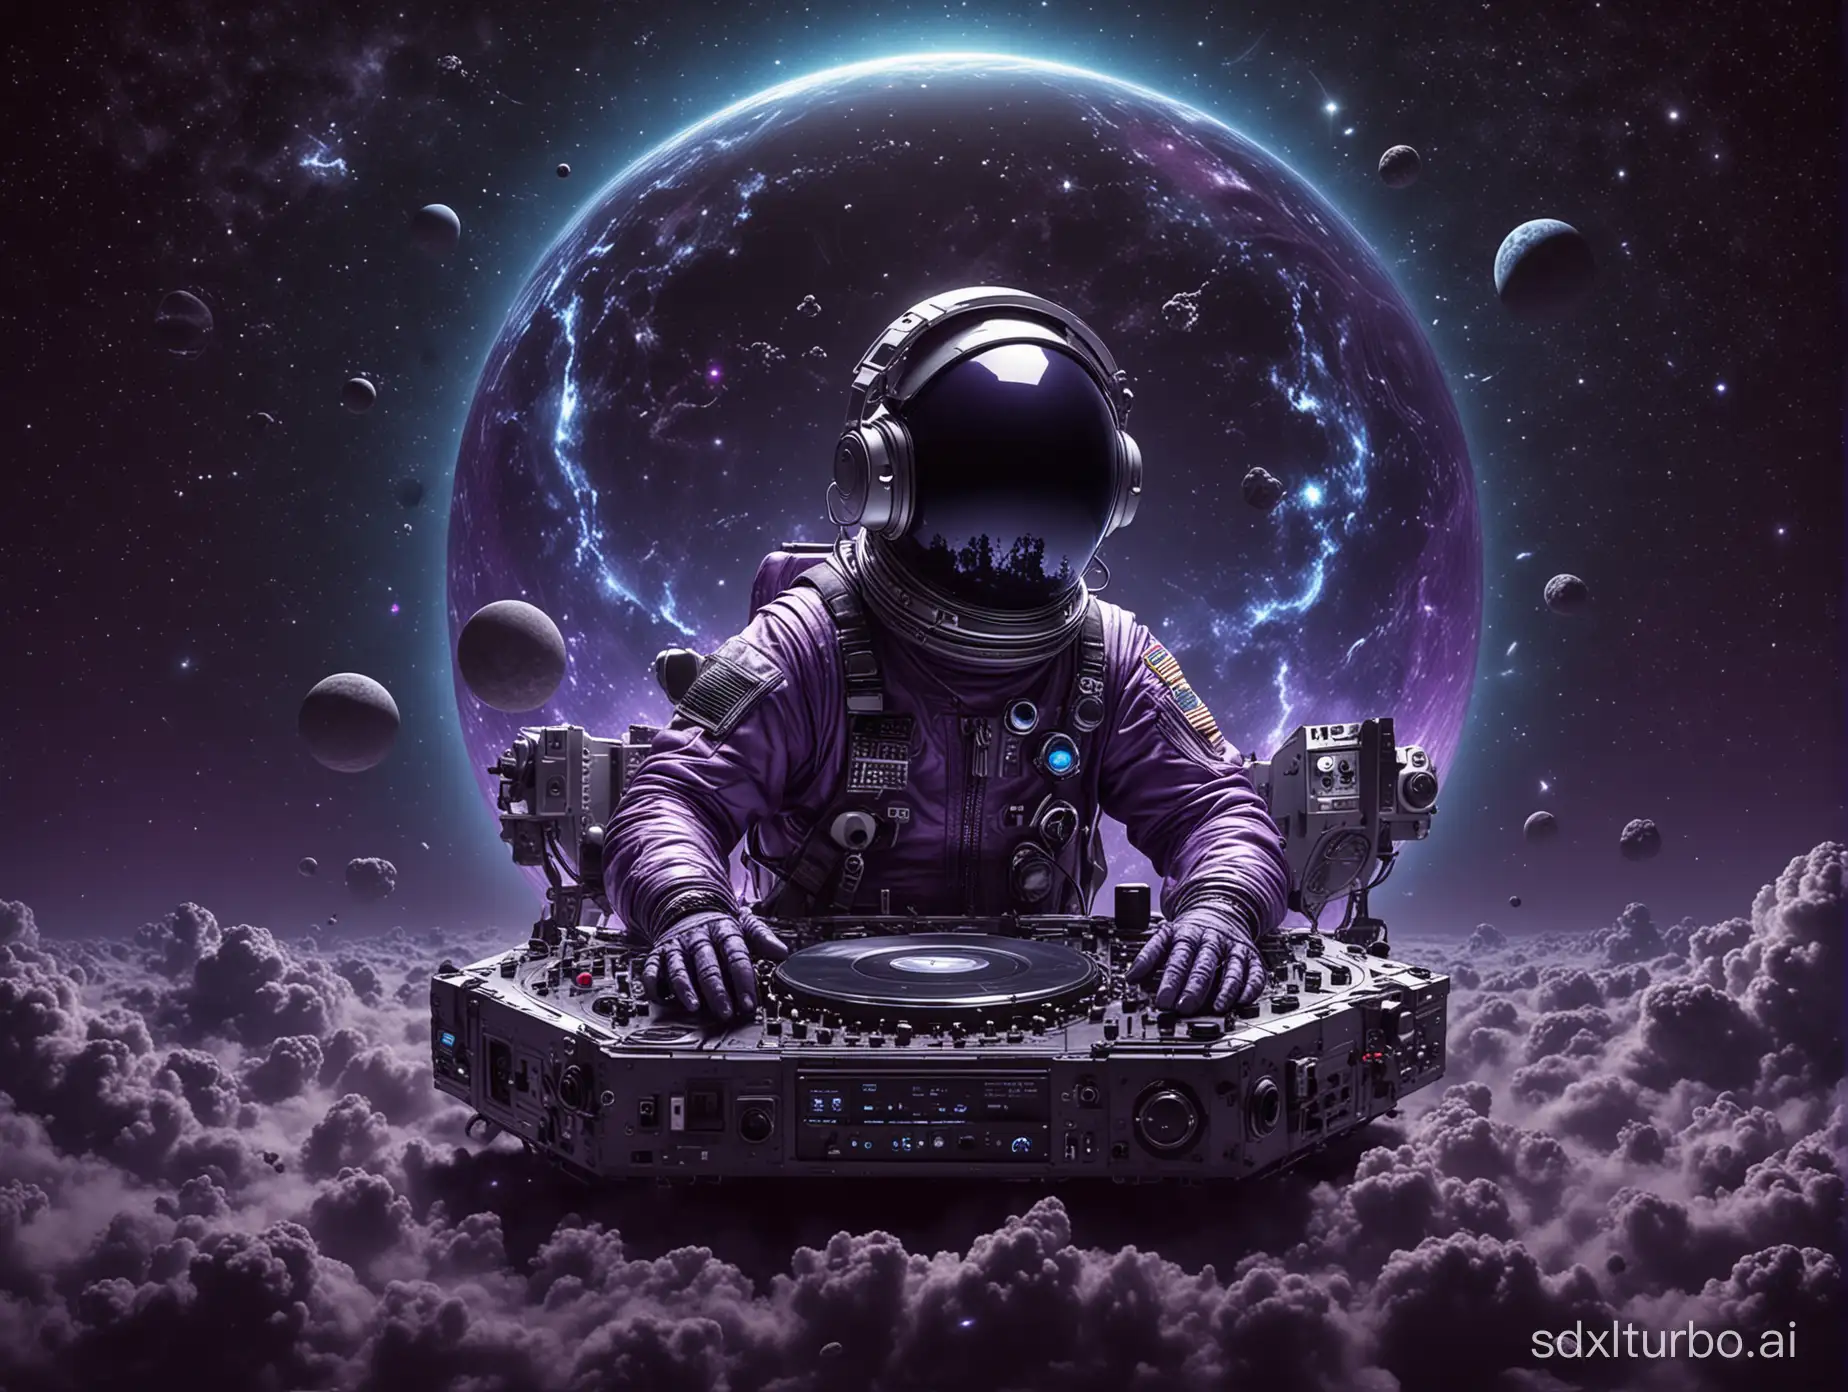 Astronaut-Floating-Among-Celestial-Bodies-with-DJ-Headphones-in-Dark-Space